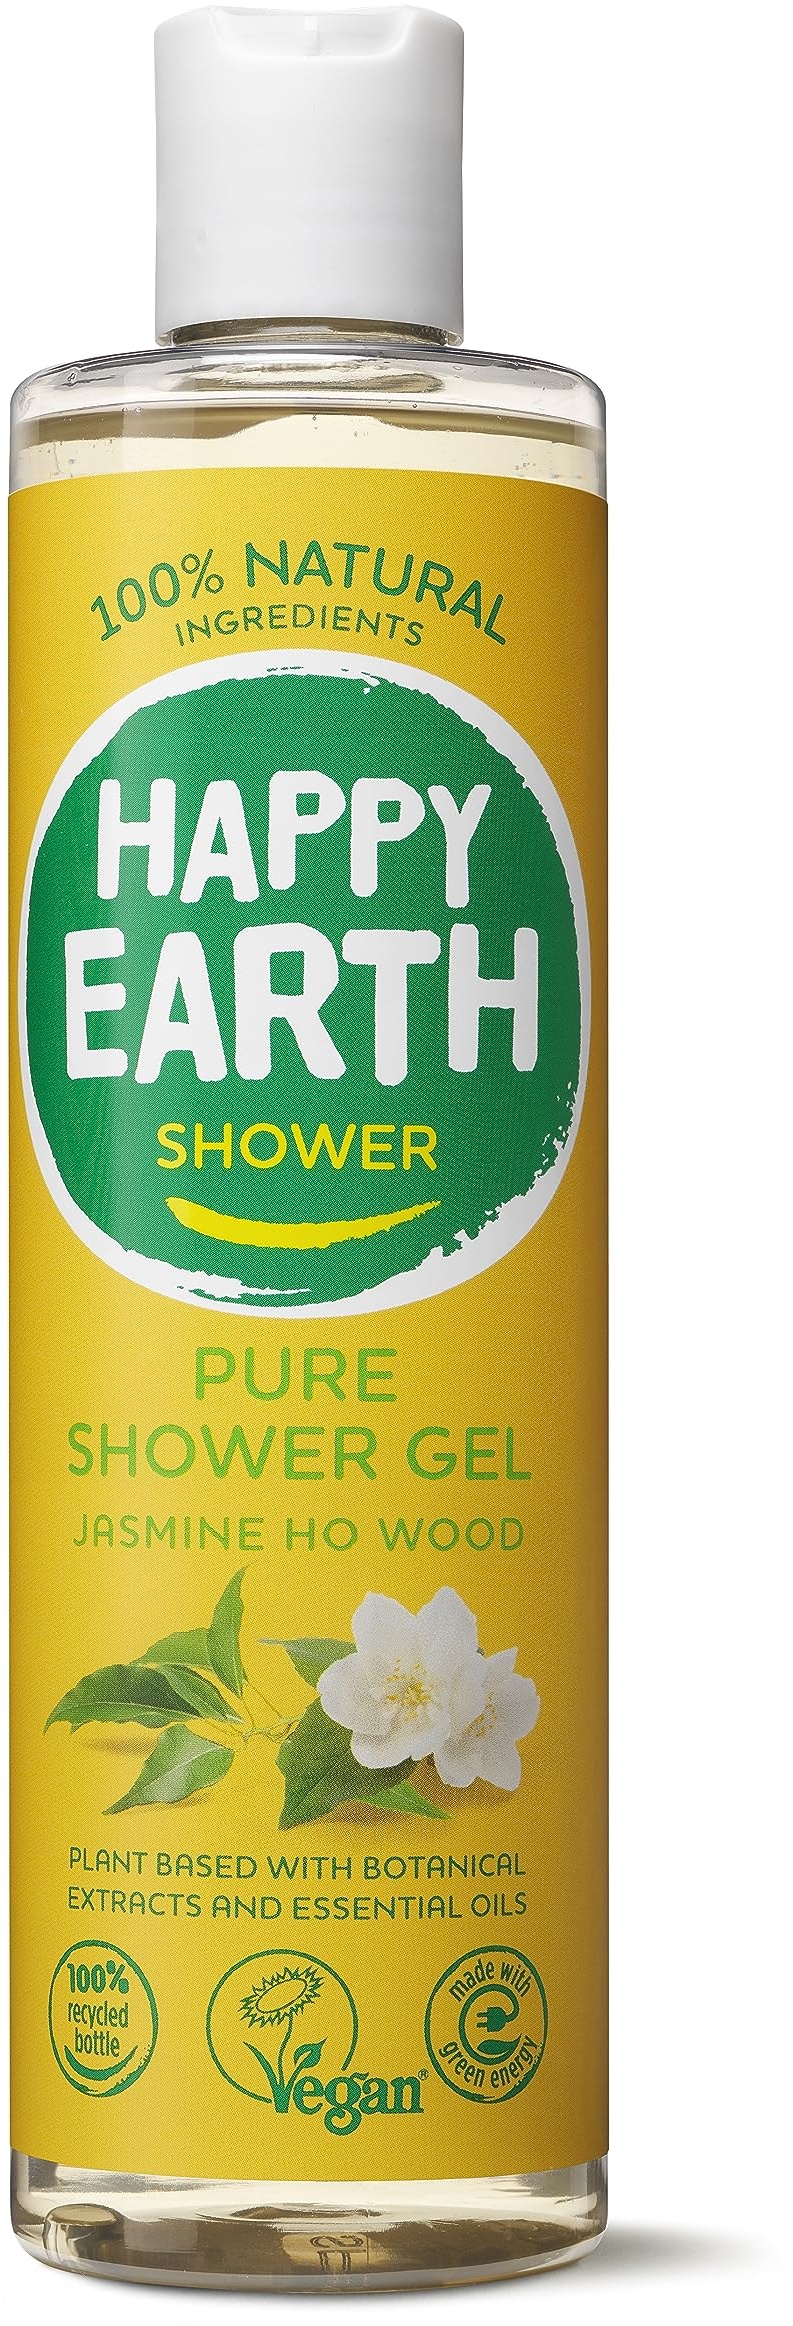 Happy Earth 100% Natural Shower Gel Jasmine Ho Wood 300ml